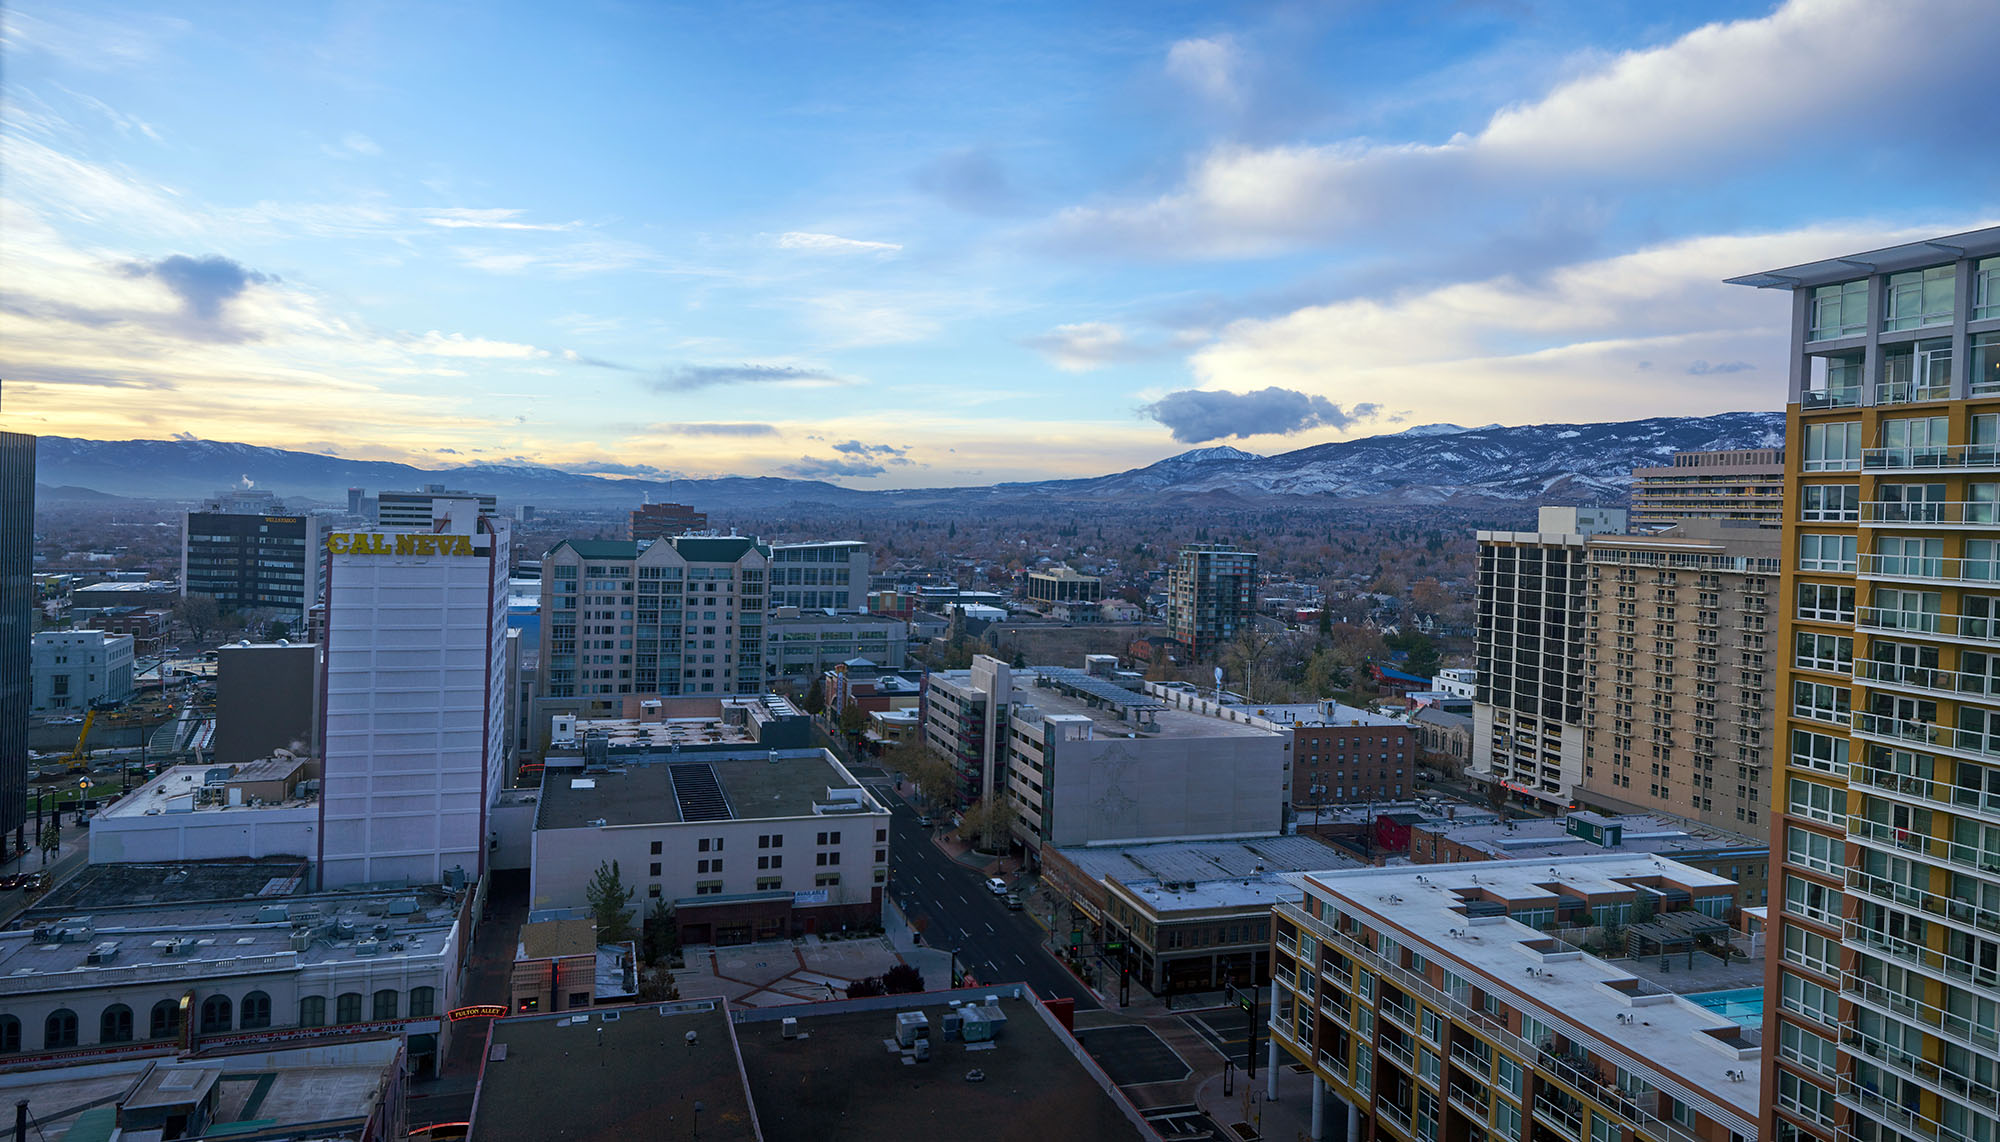 Reno, Nevada December 2015